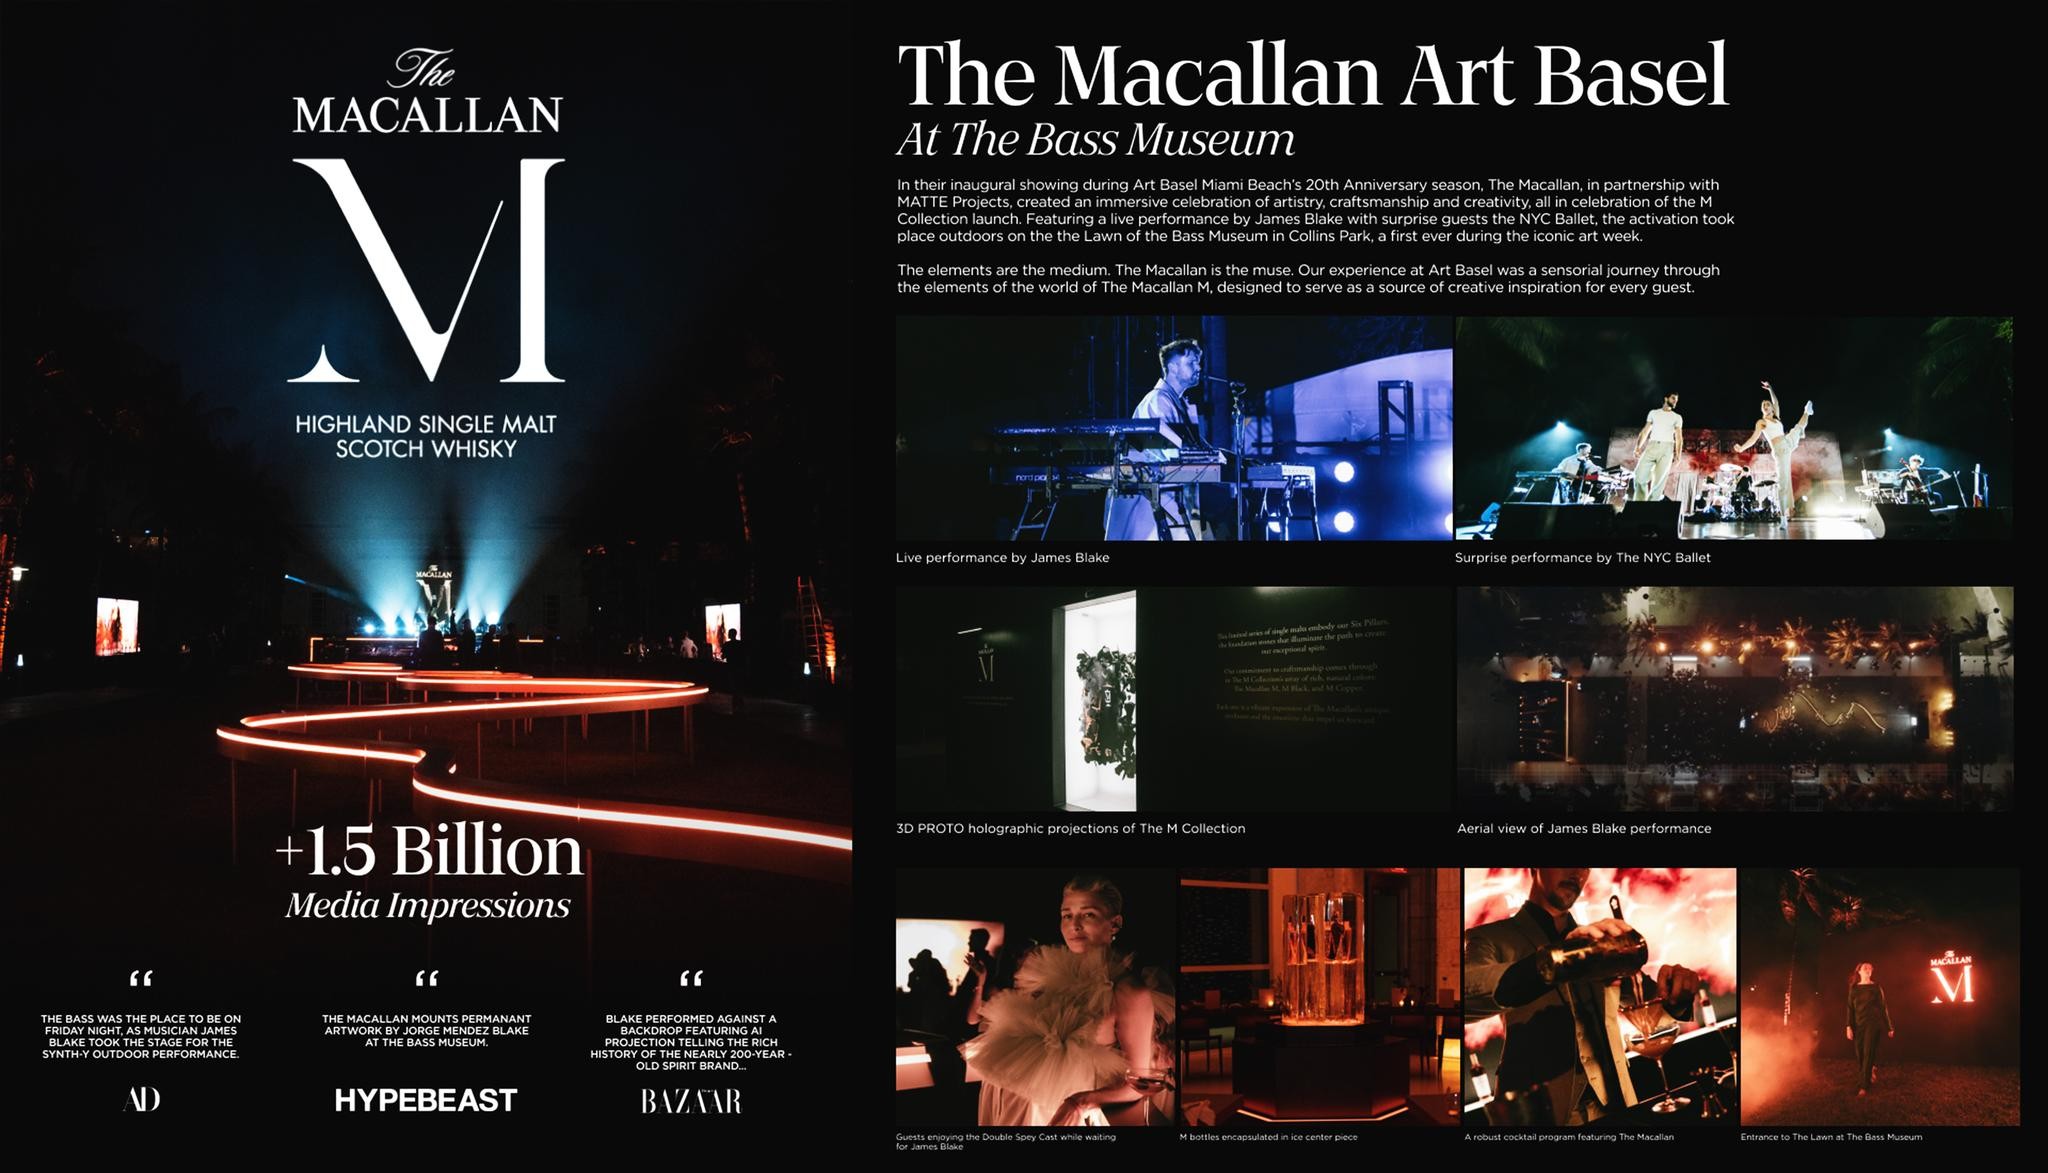 The Macallan Art Basel